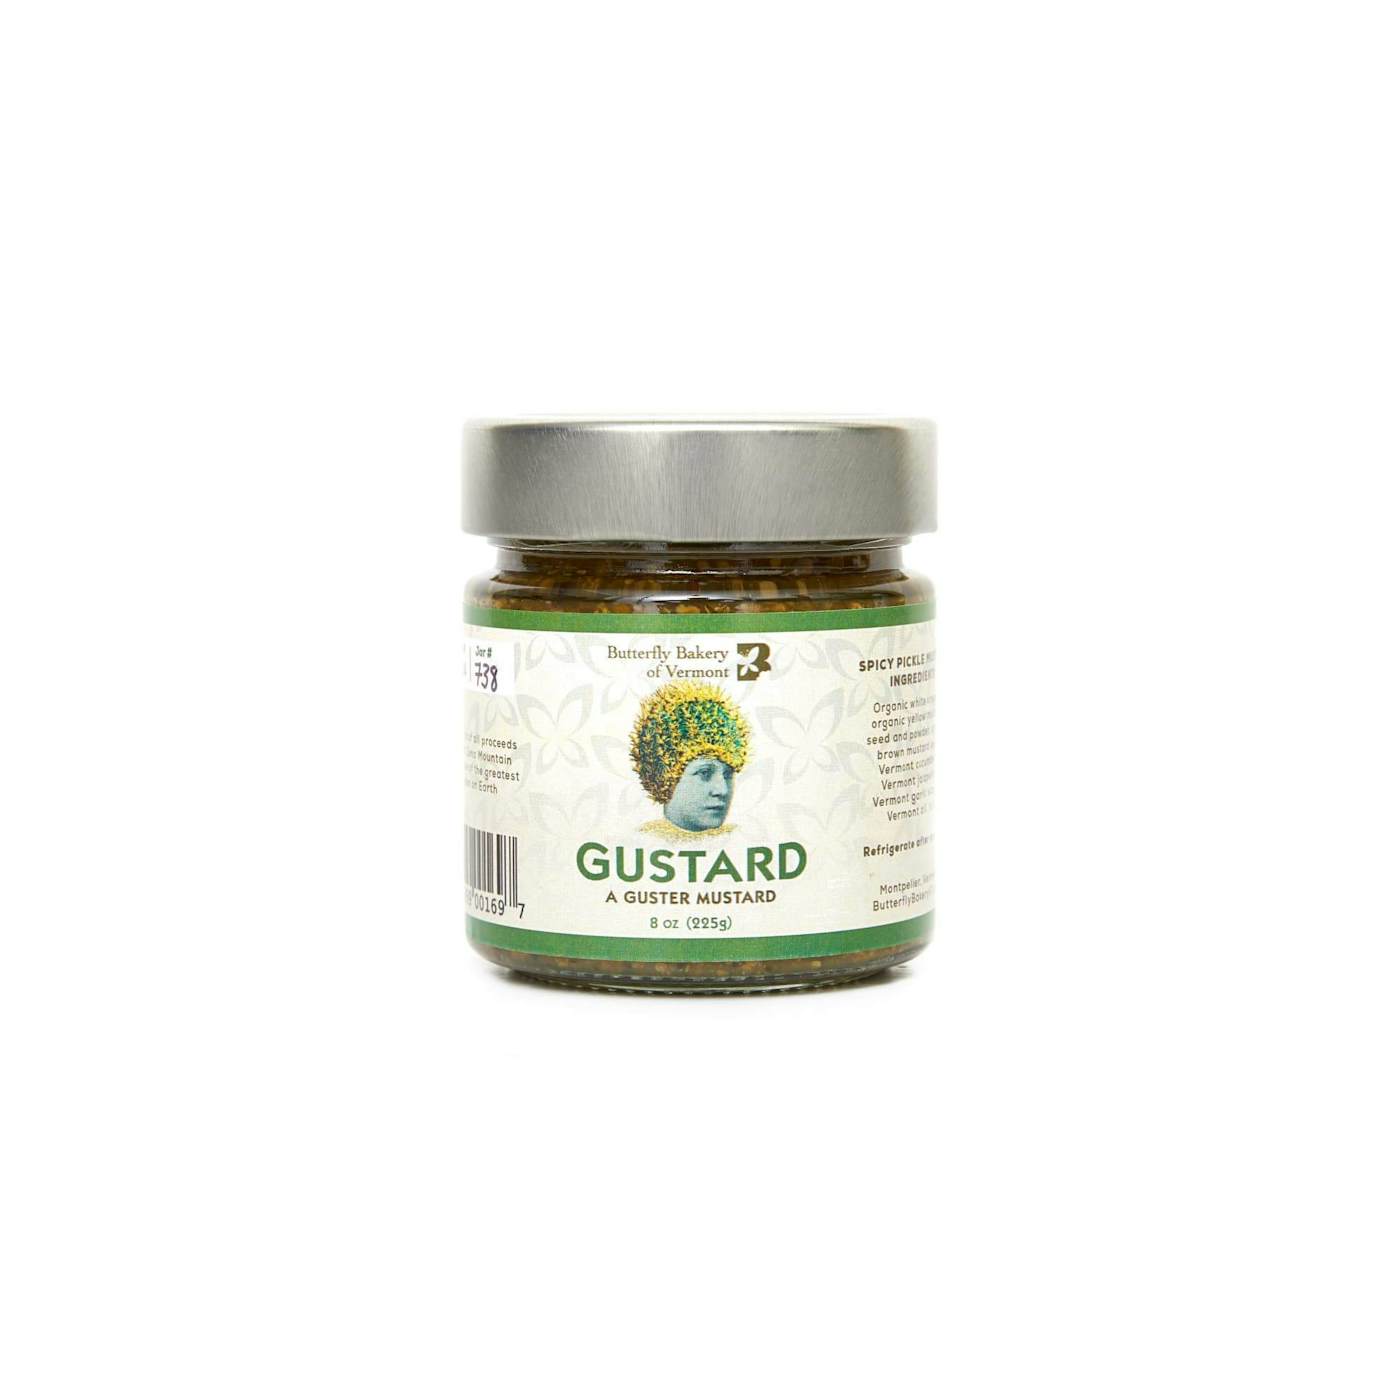 'Gustard' A Guster Mustard